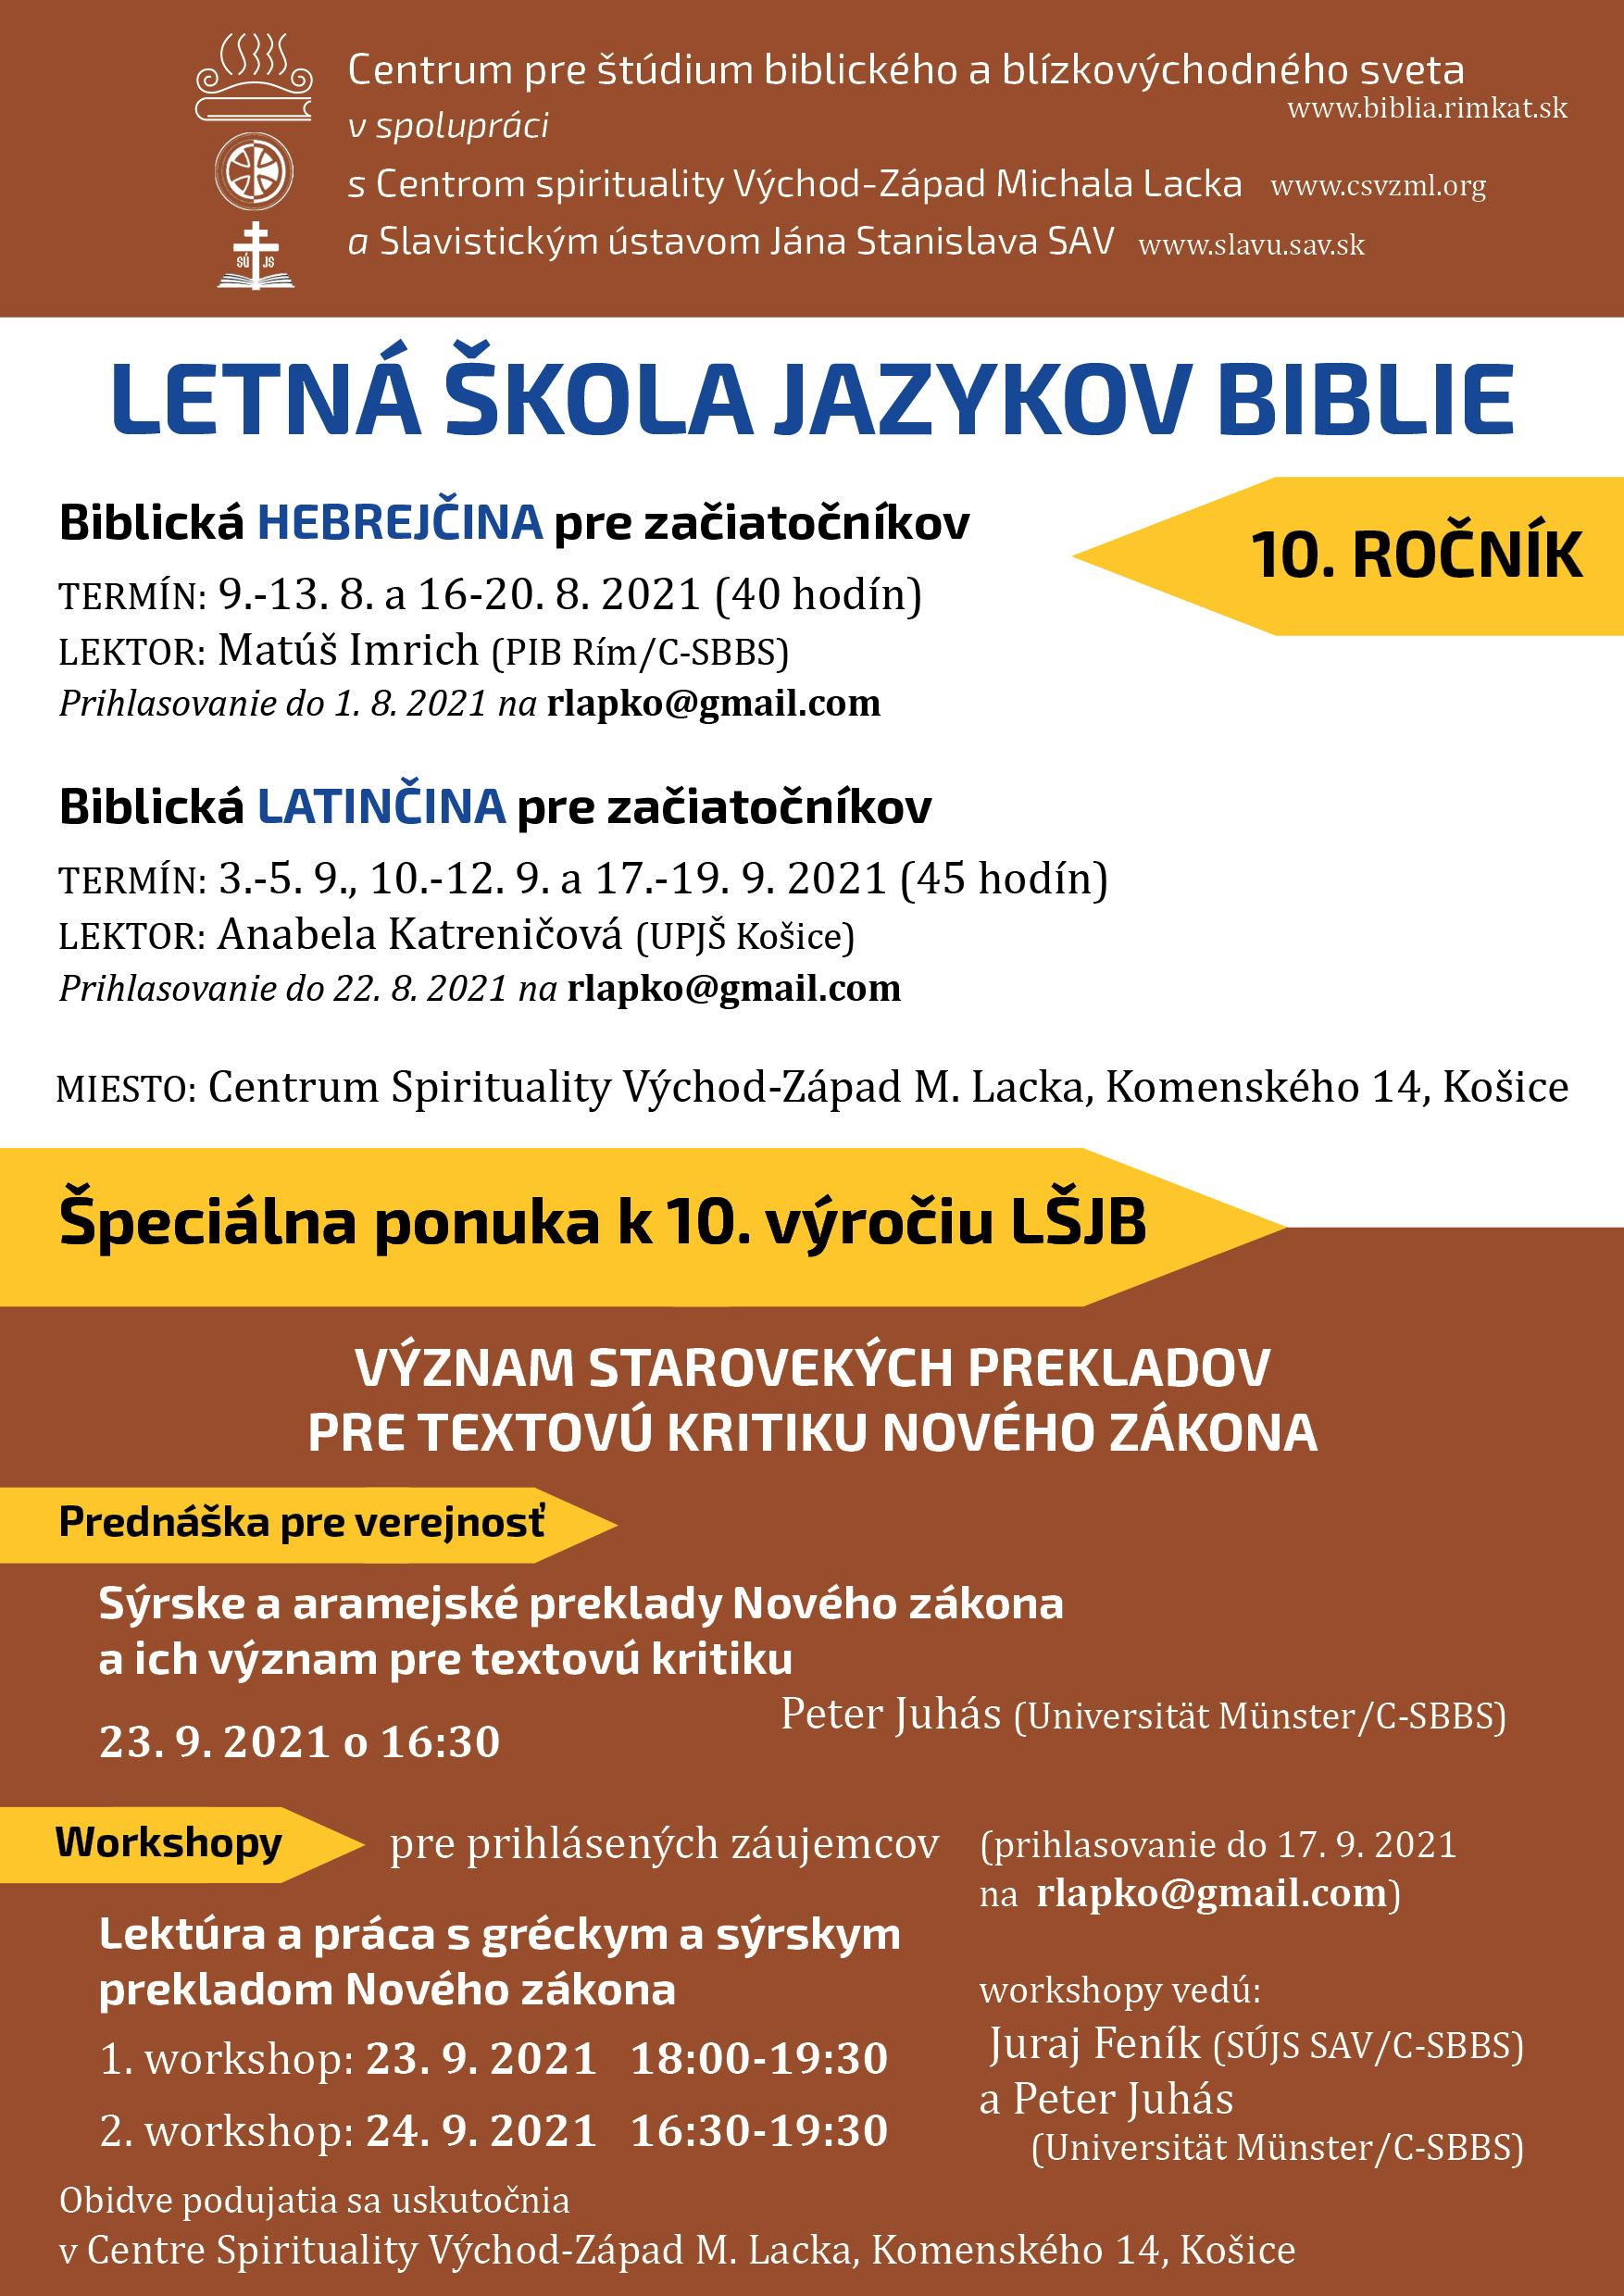 Kosice, Letna skola jazykov Biblie, plagat